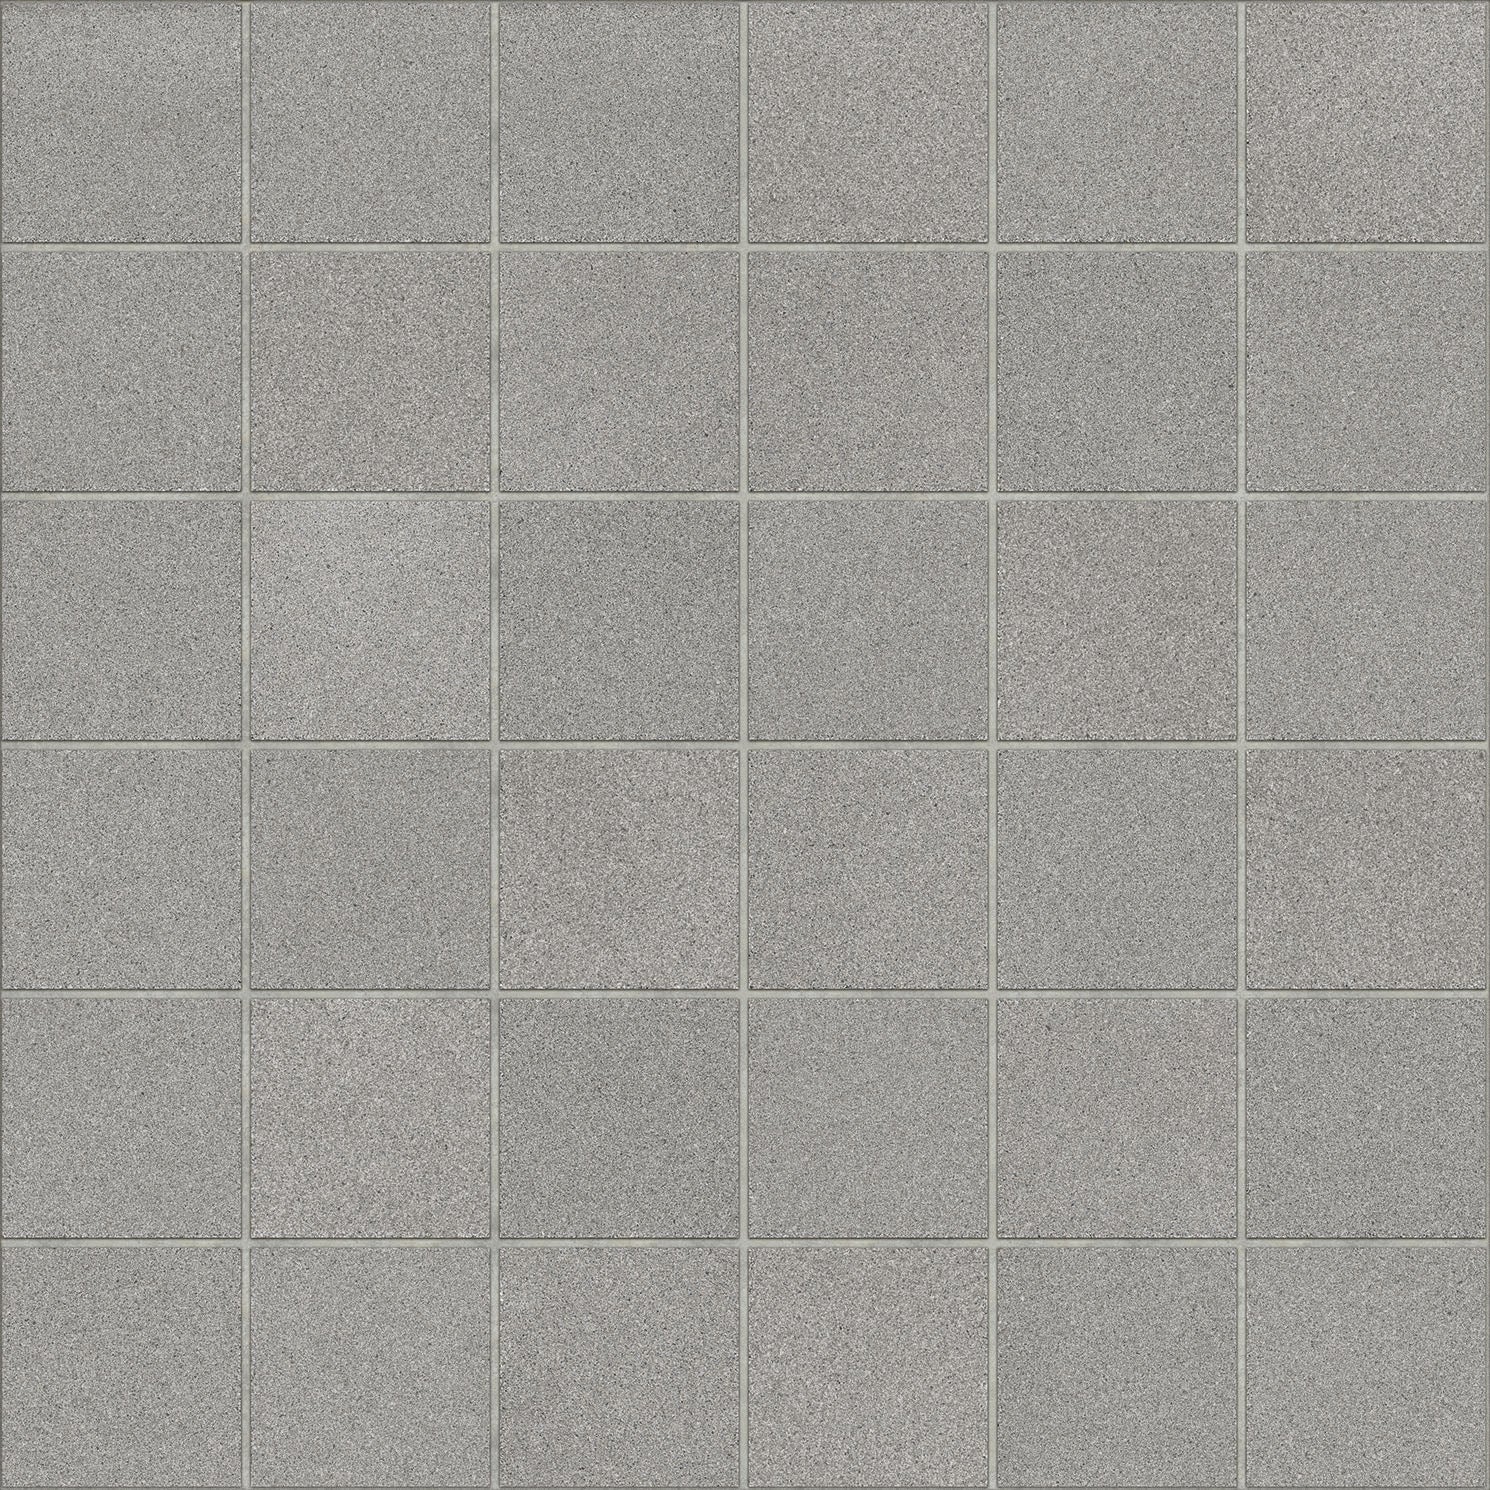 landmark 9mm masterplan metro gray straight stack 2x2 mosaic 12x12x9mm matte rectified porcelain tile distributed by surface group international